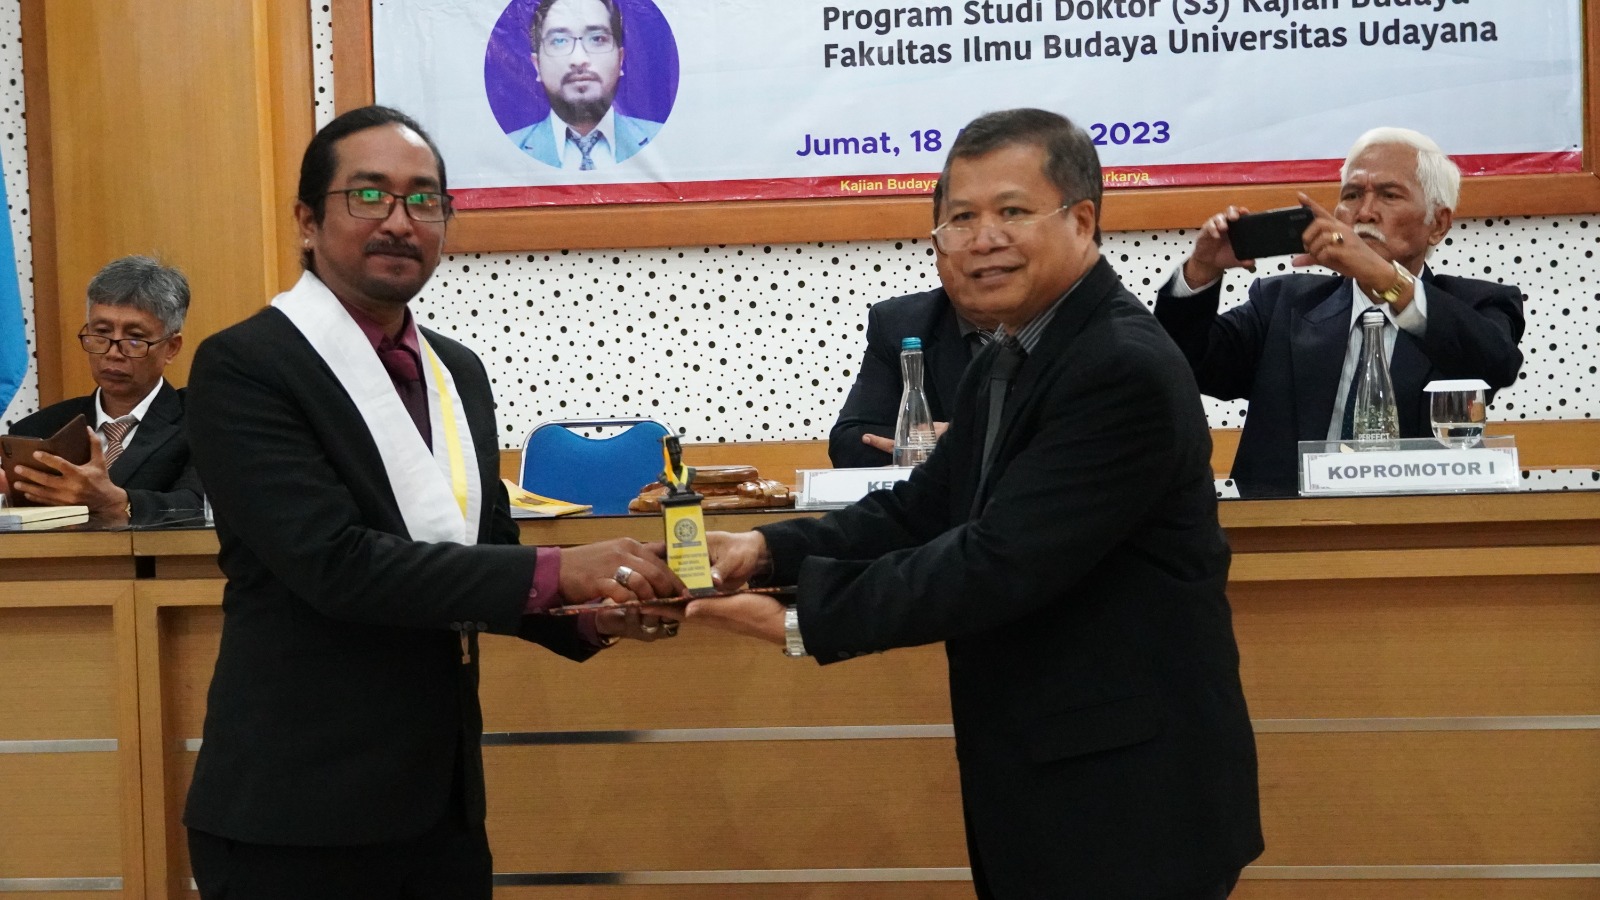 Dosen Unhi Denpasar Raih Doktor Kajian Budaya di Fakultas Ilmu Budaya Unud